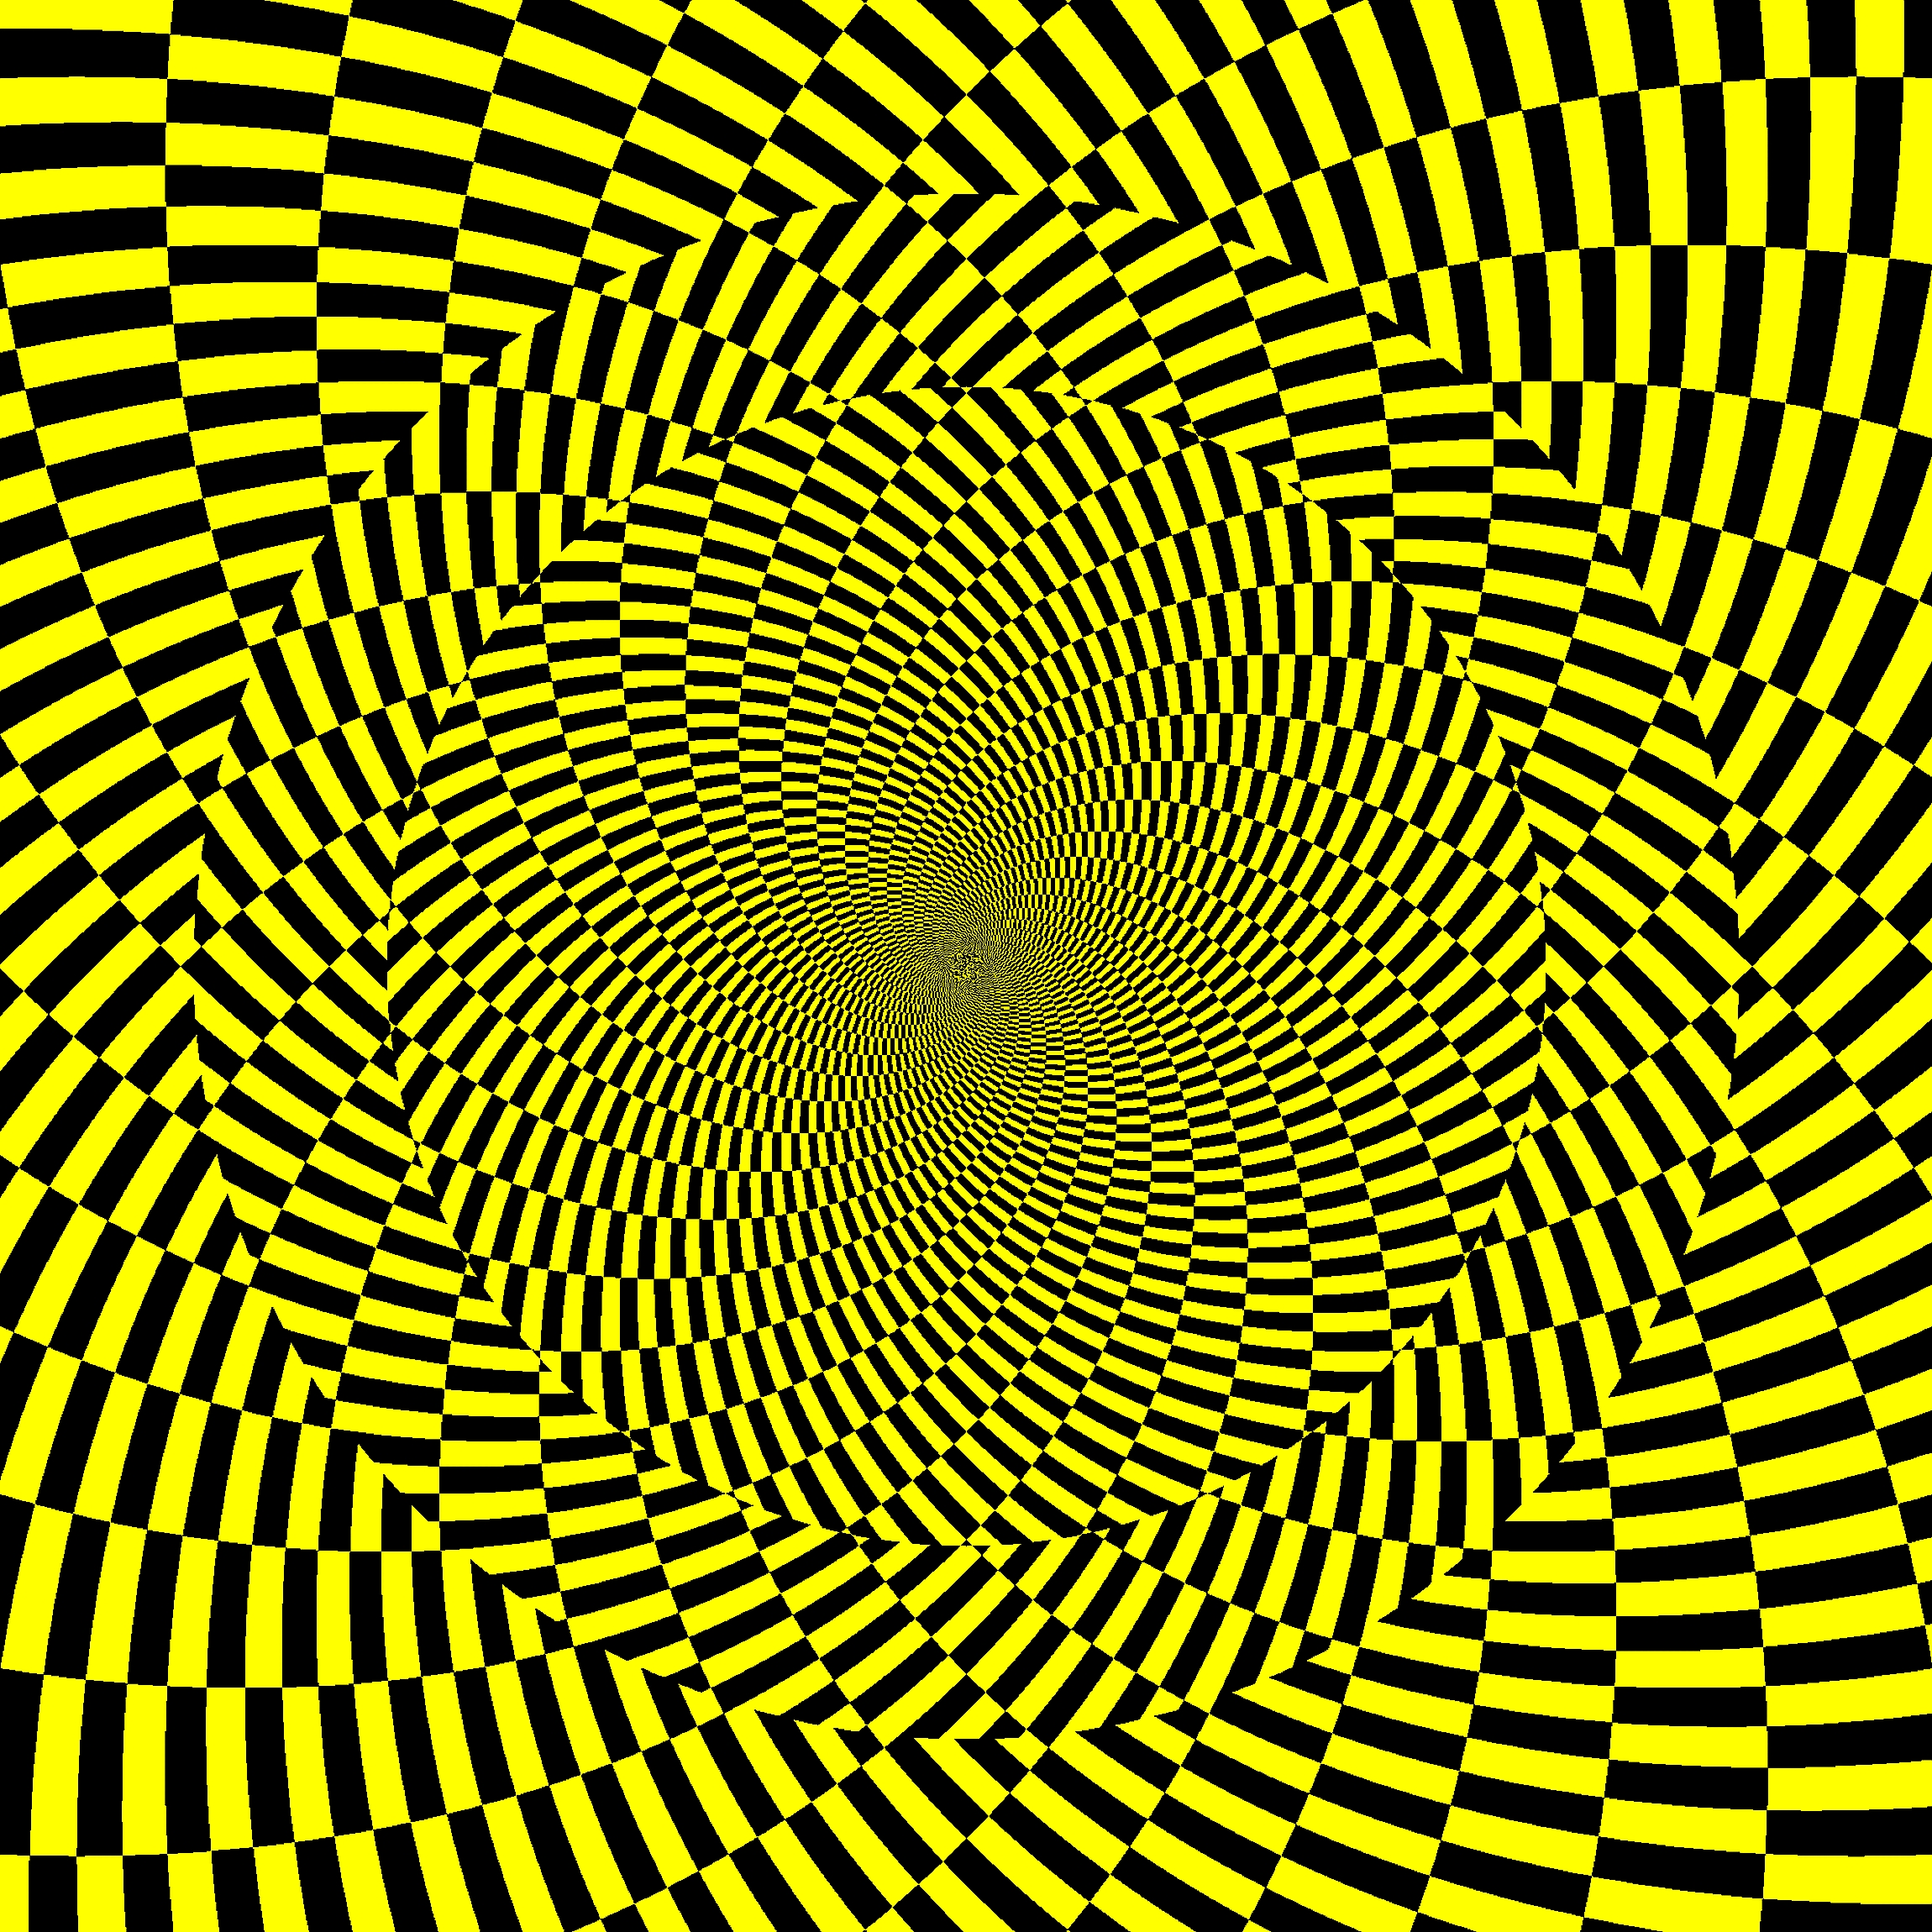 spiral, illusions, optical illusions - desktop wallpaper